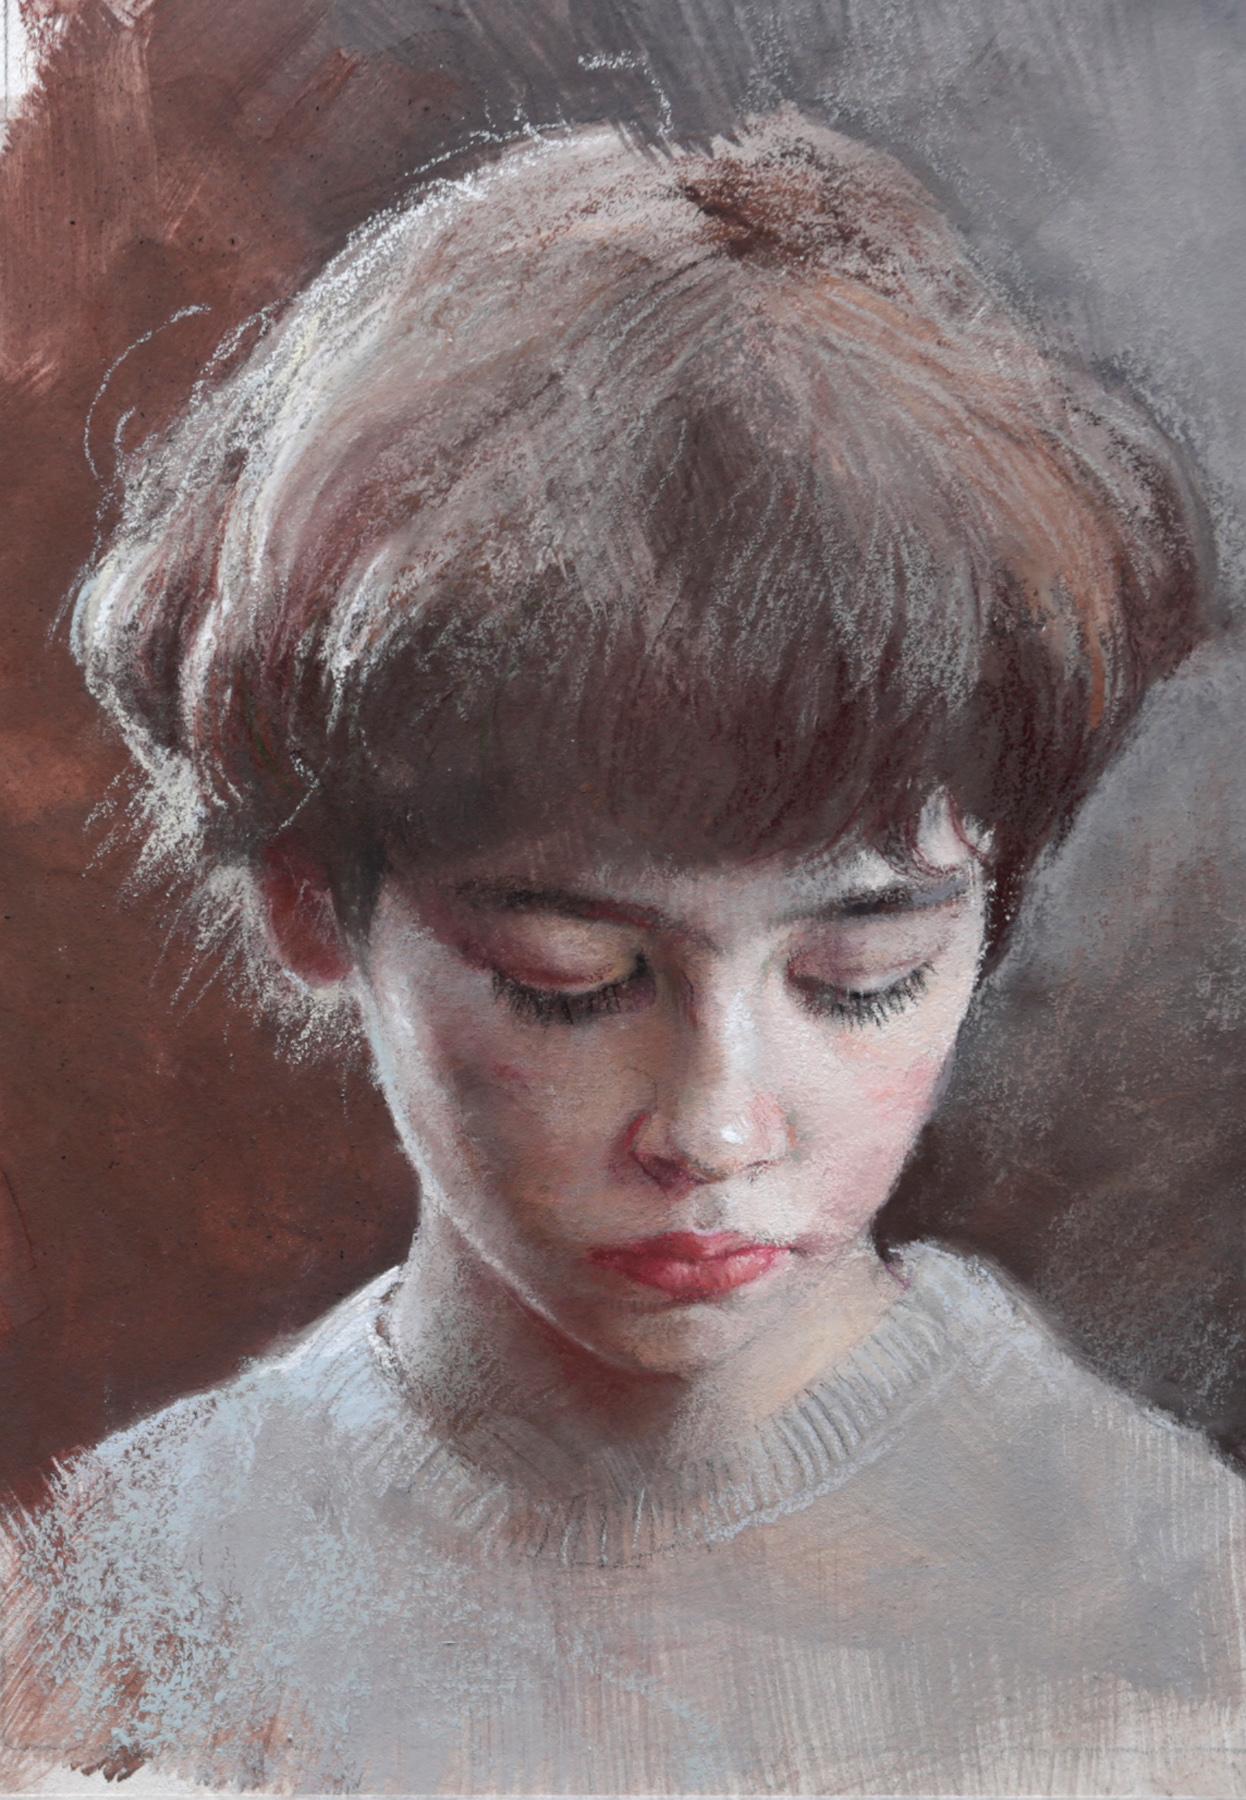 Boy's portrait. Original modern art painting